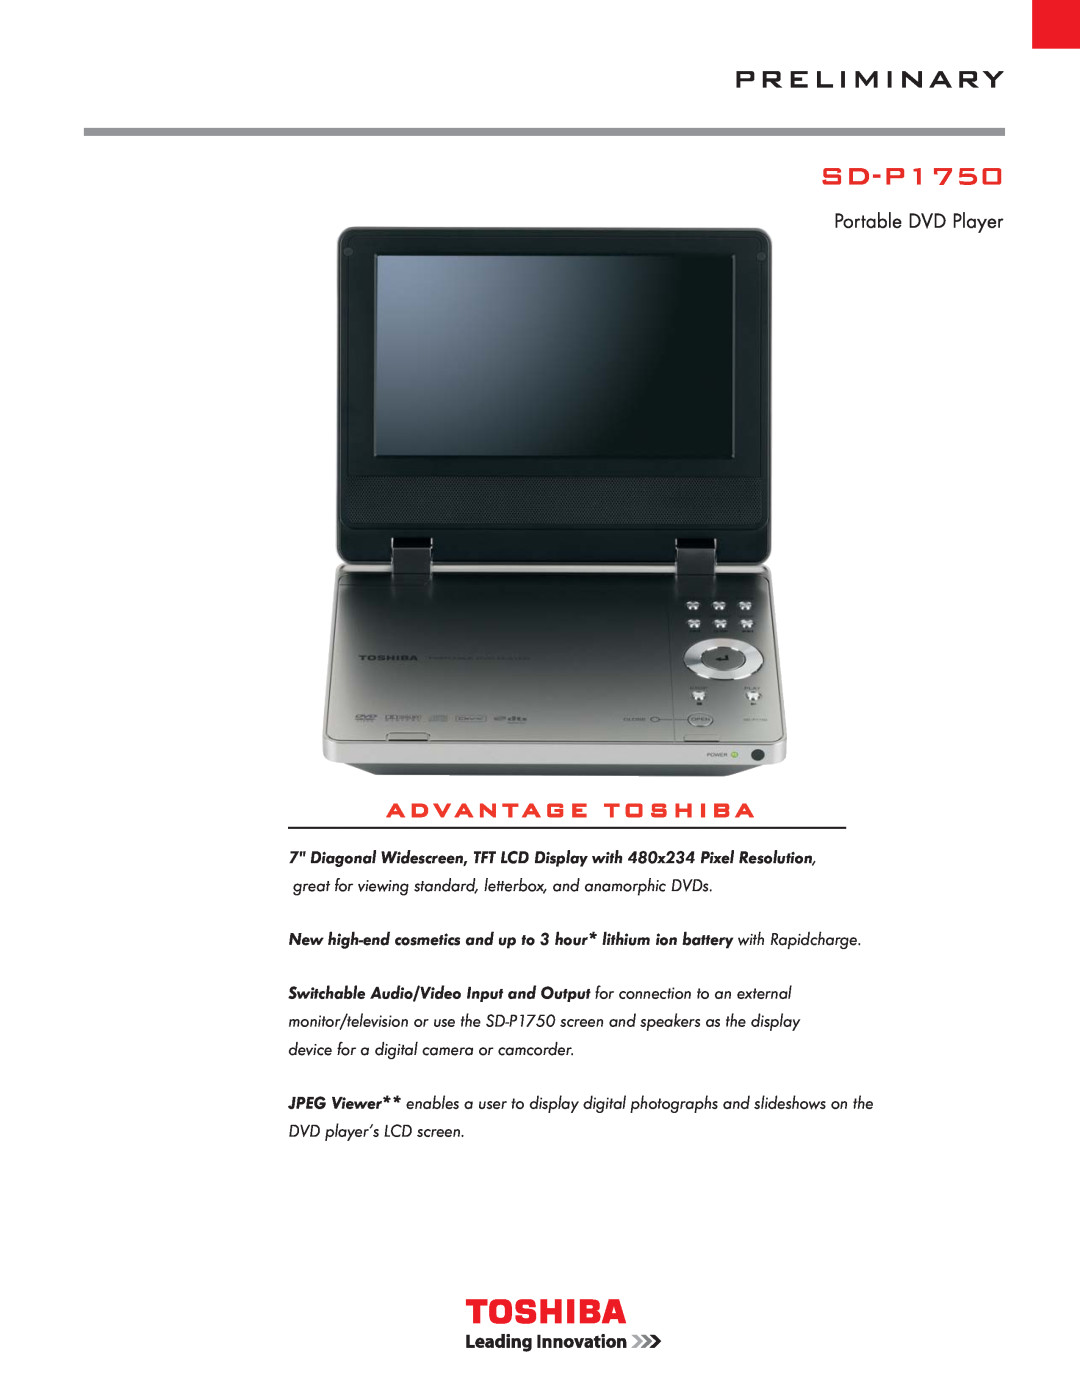 Toshiba SD-P1750 manual Preliminary, Advantage Toshiba, Portable DVD Player 